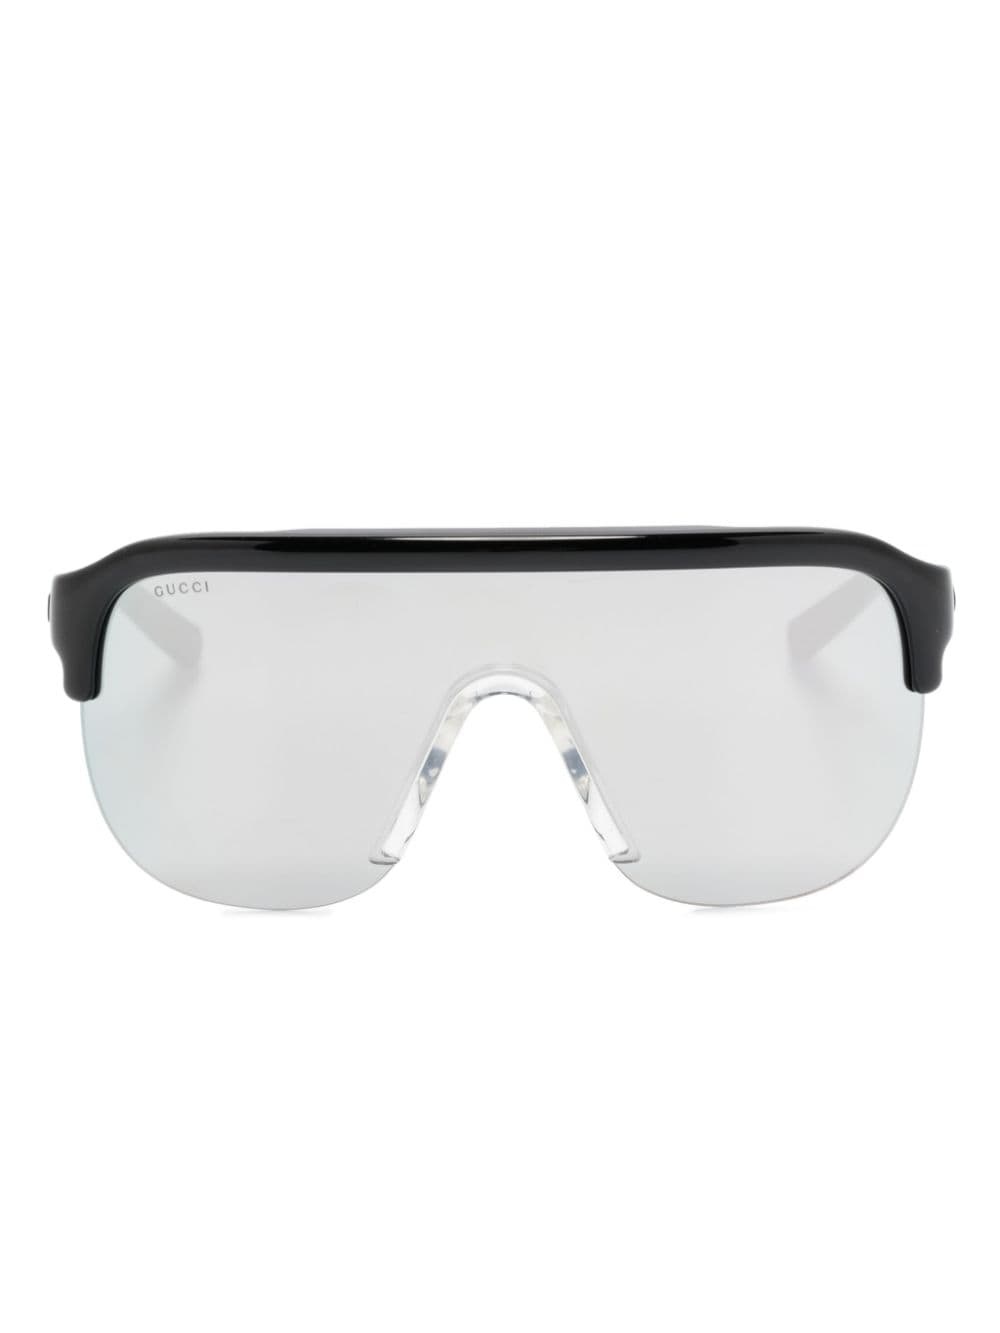 GG1645S over-sized frame sunglasses - 1